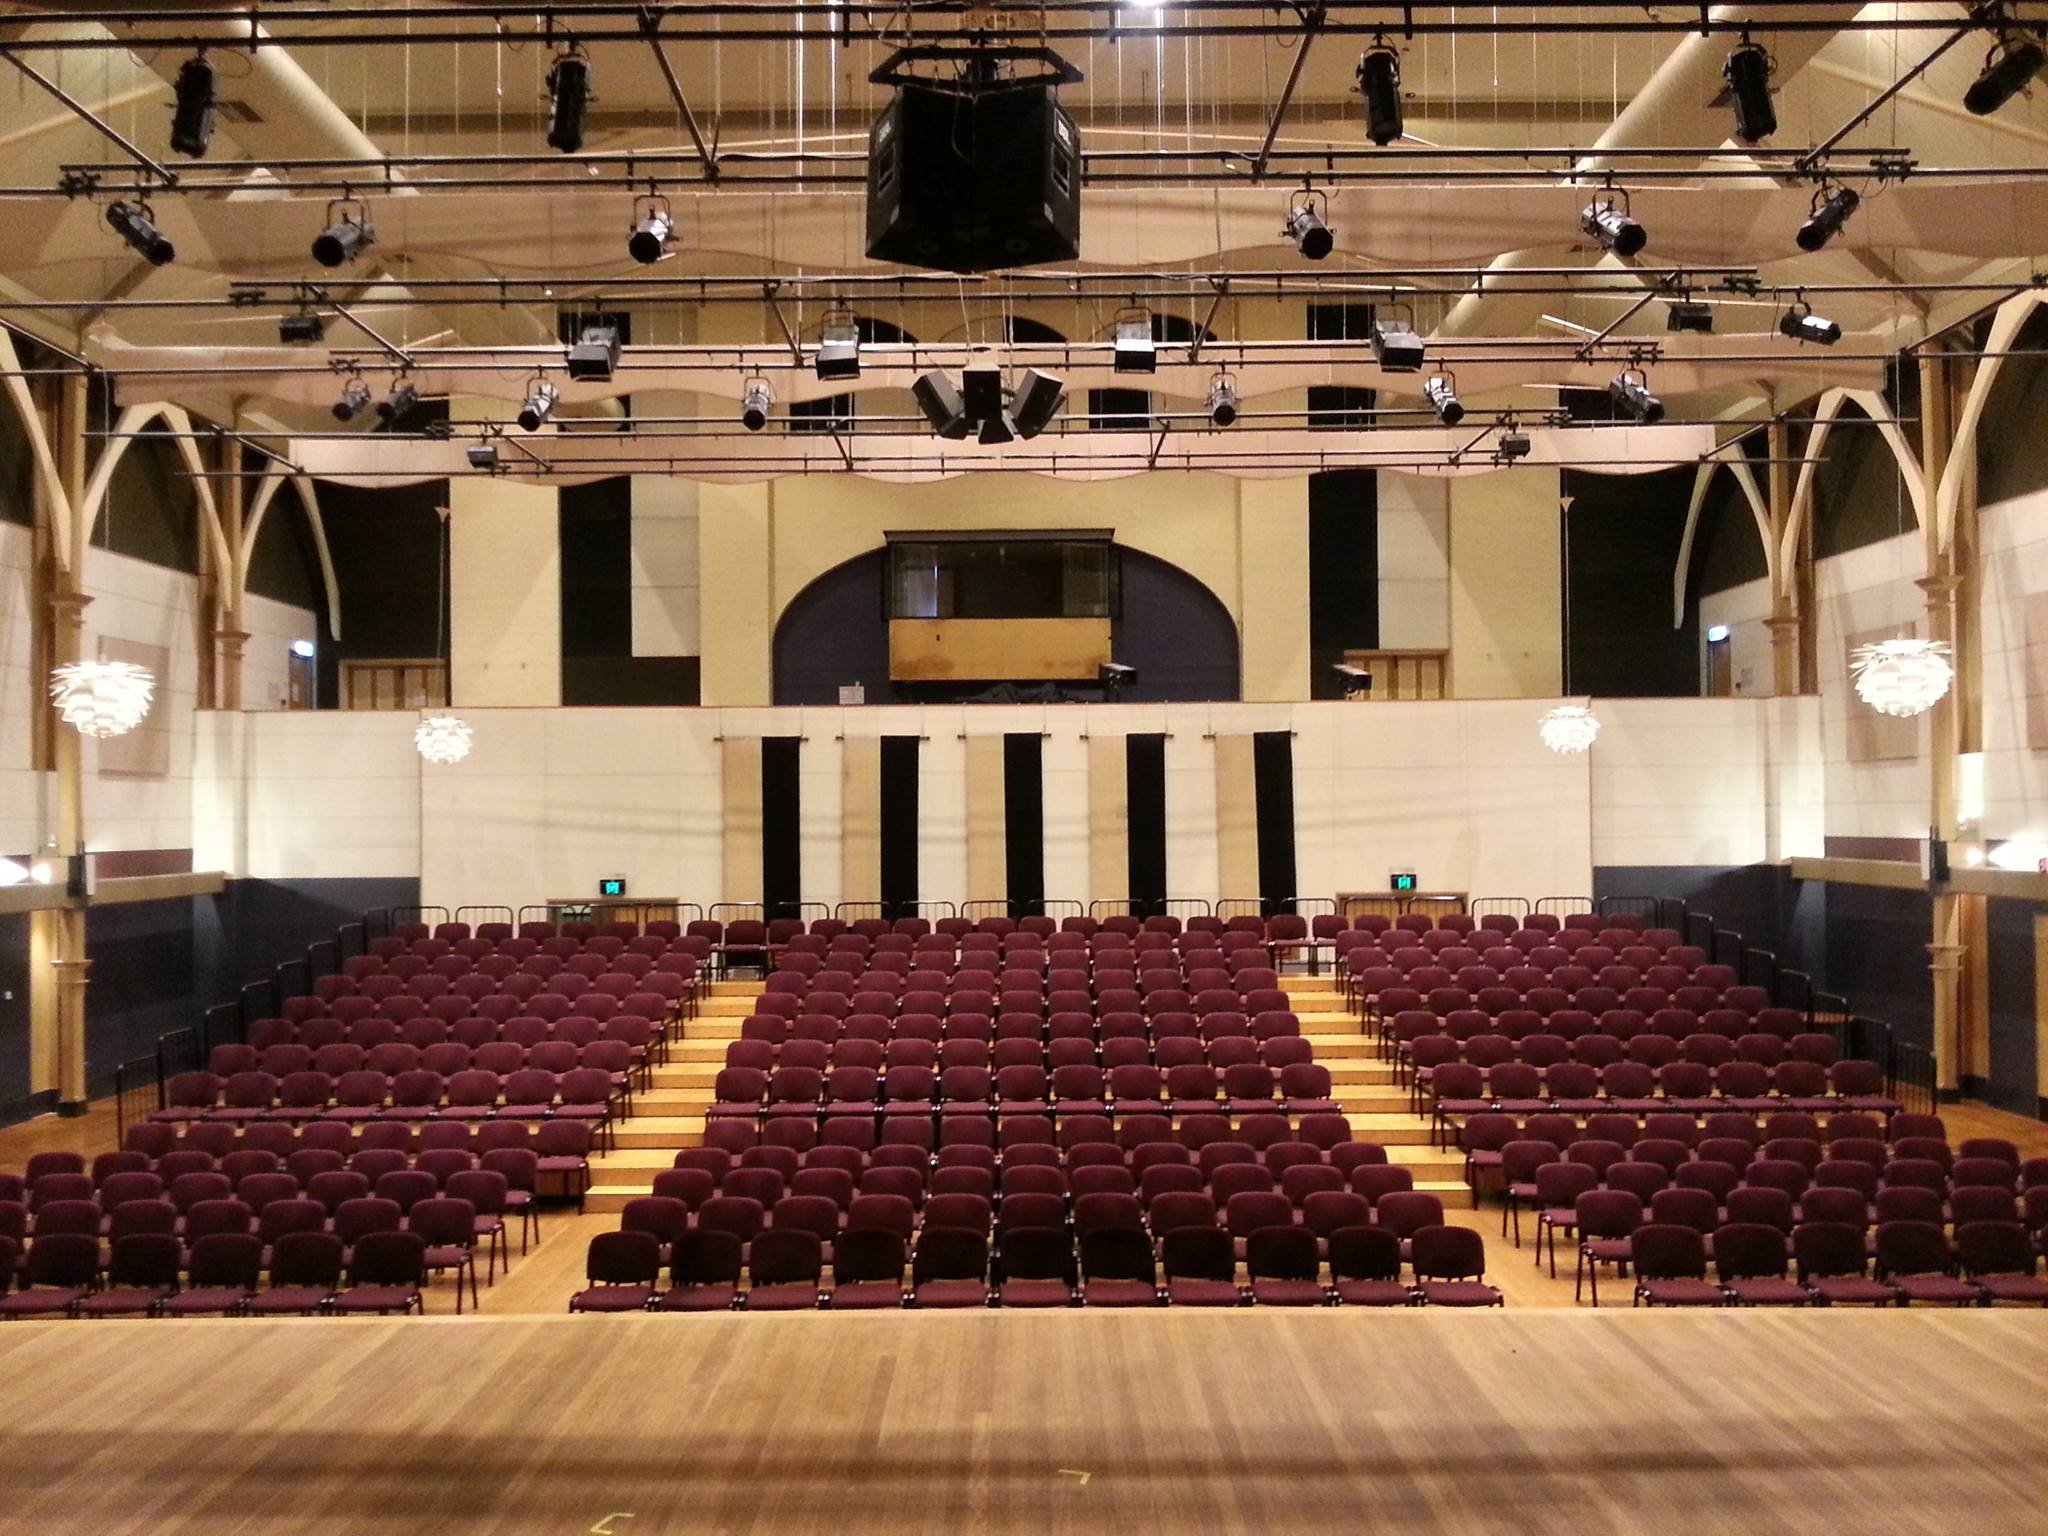 Concert Hall Seating Risers.jpg